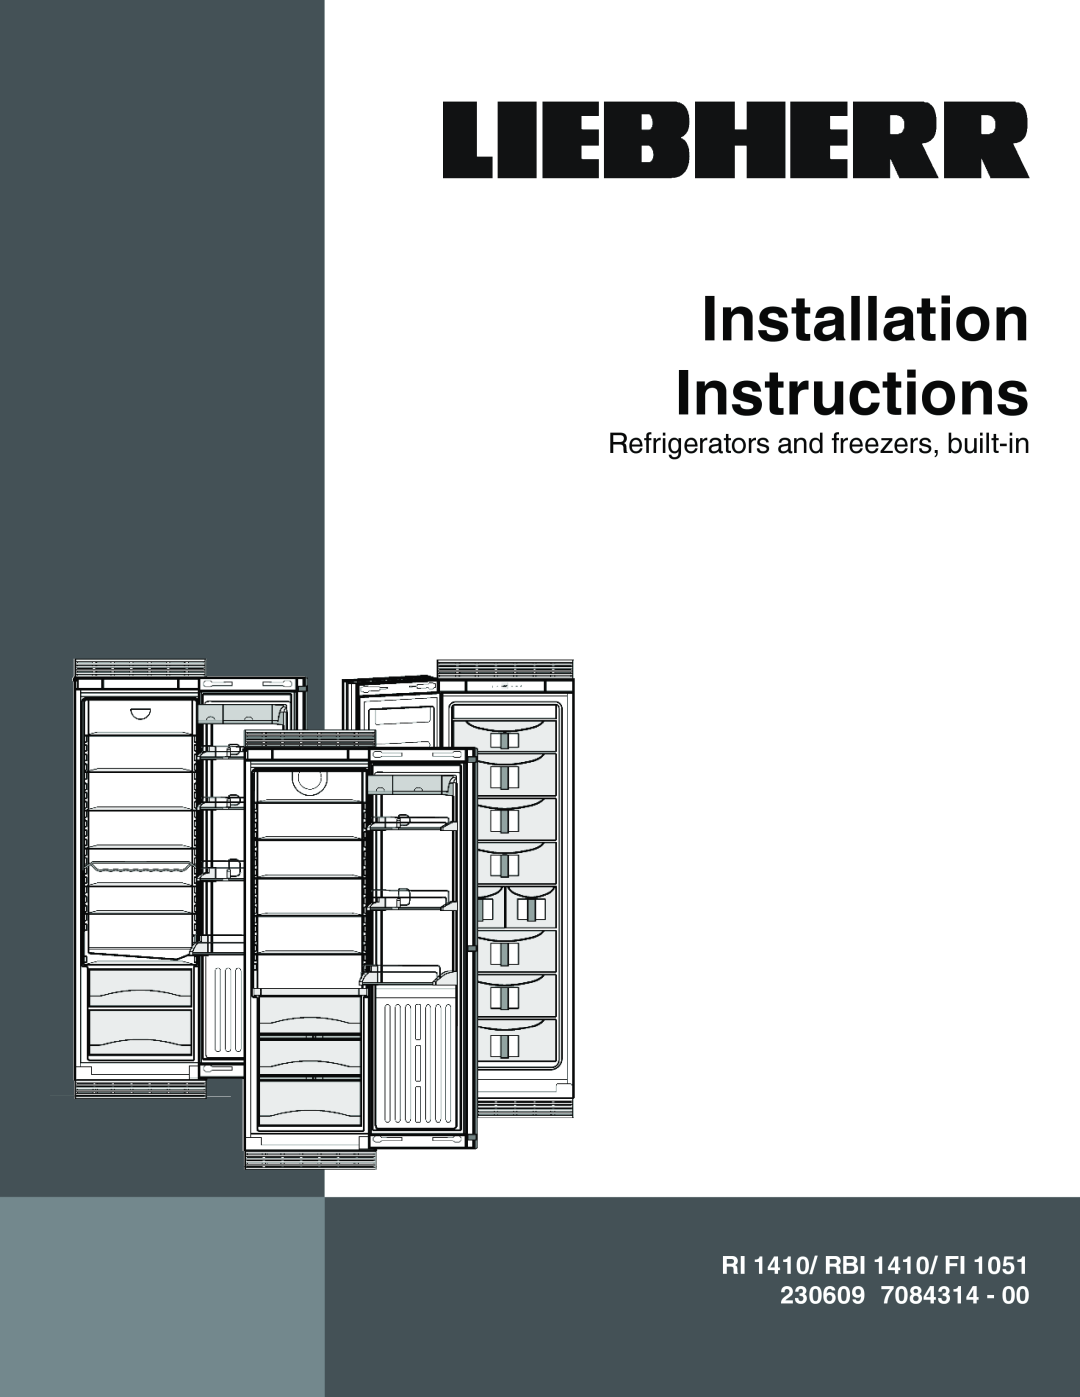 Liebherr RI 1410/ RBI 1410/ FI 1051 manual Installation Instructions, Refrigerators and freezers, built-in 